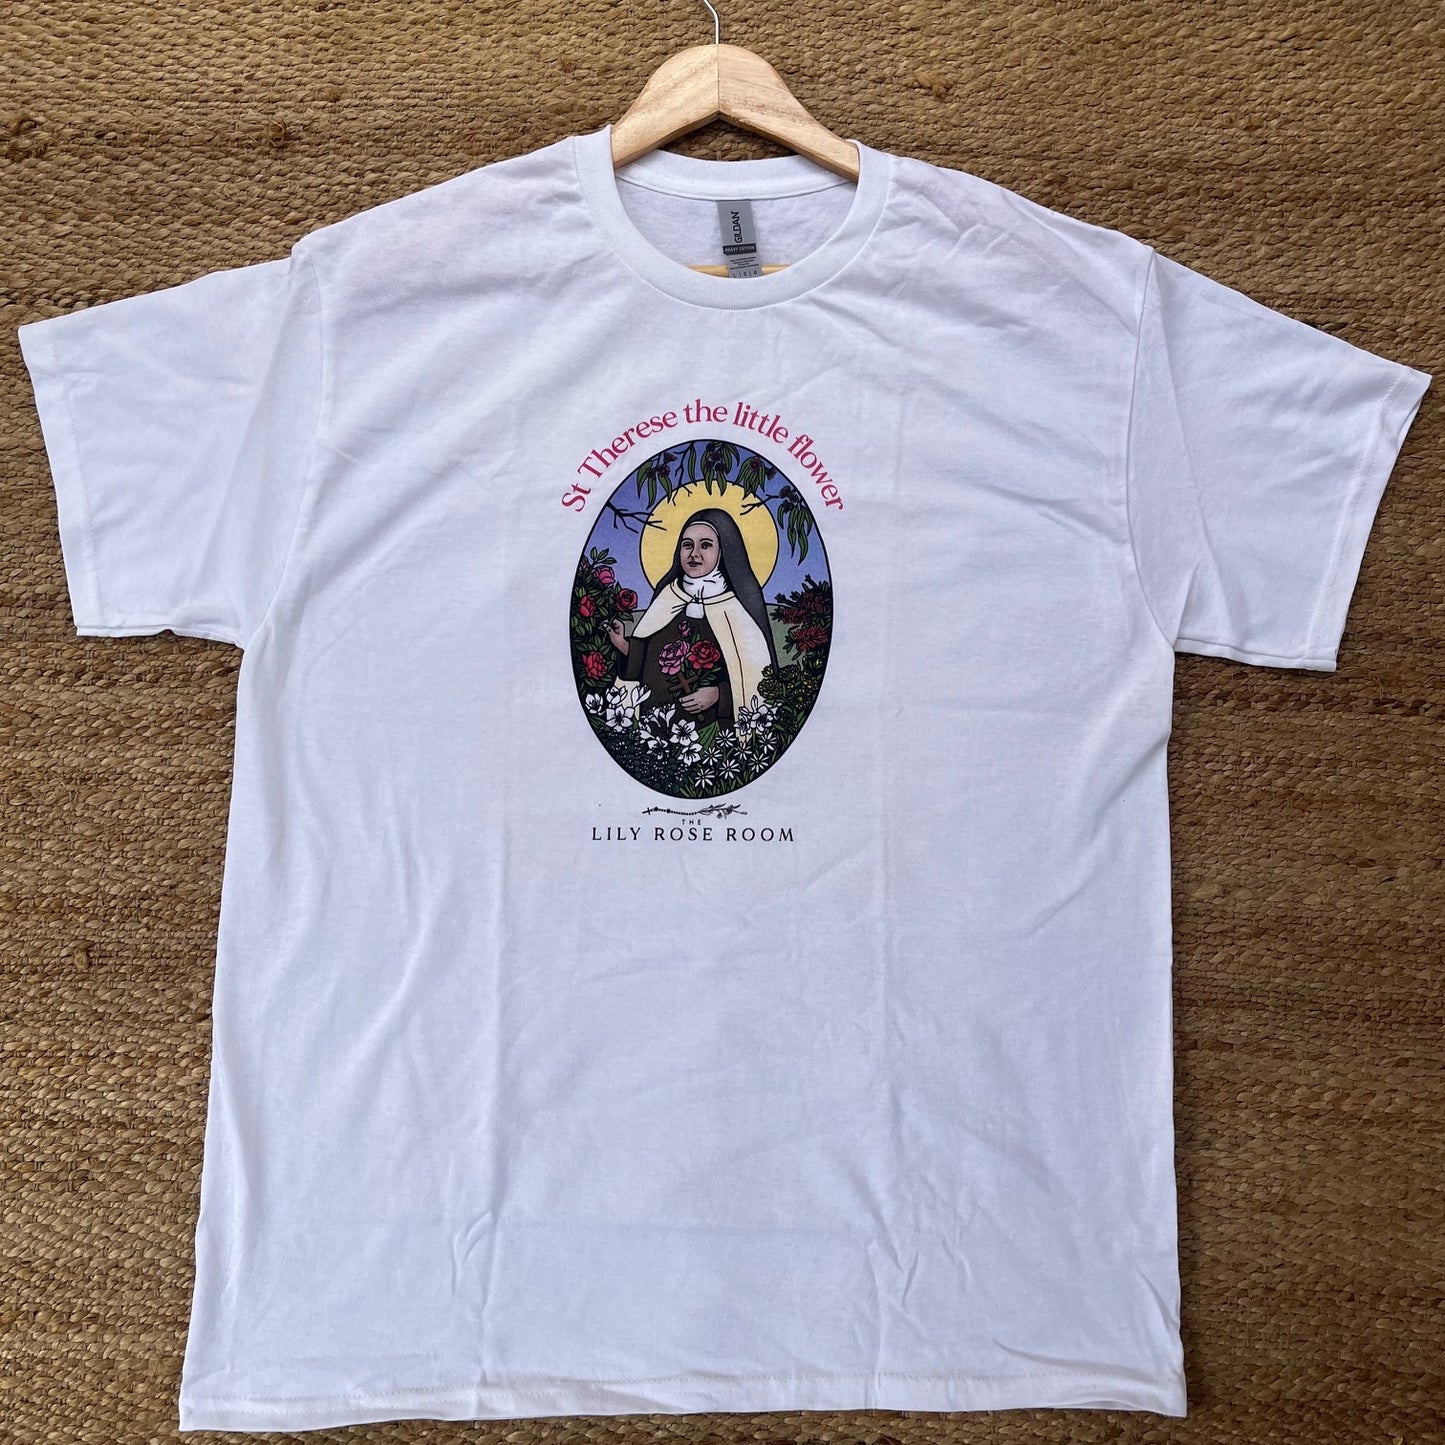 Australian Flower Series Icon T-Shirt: St Therese the little flower